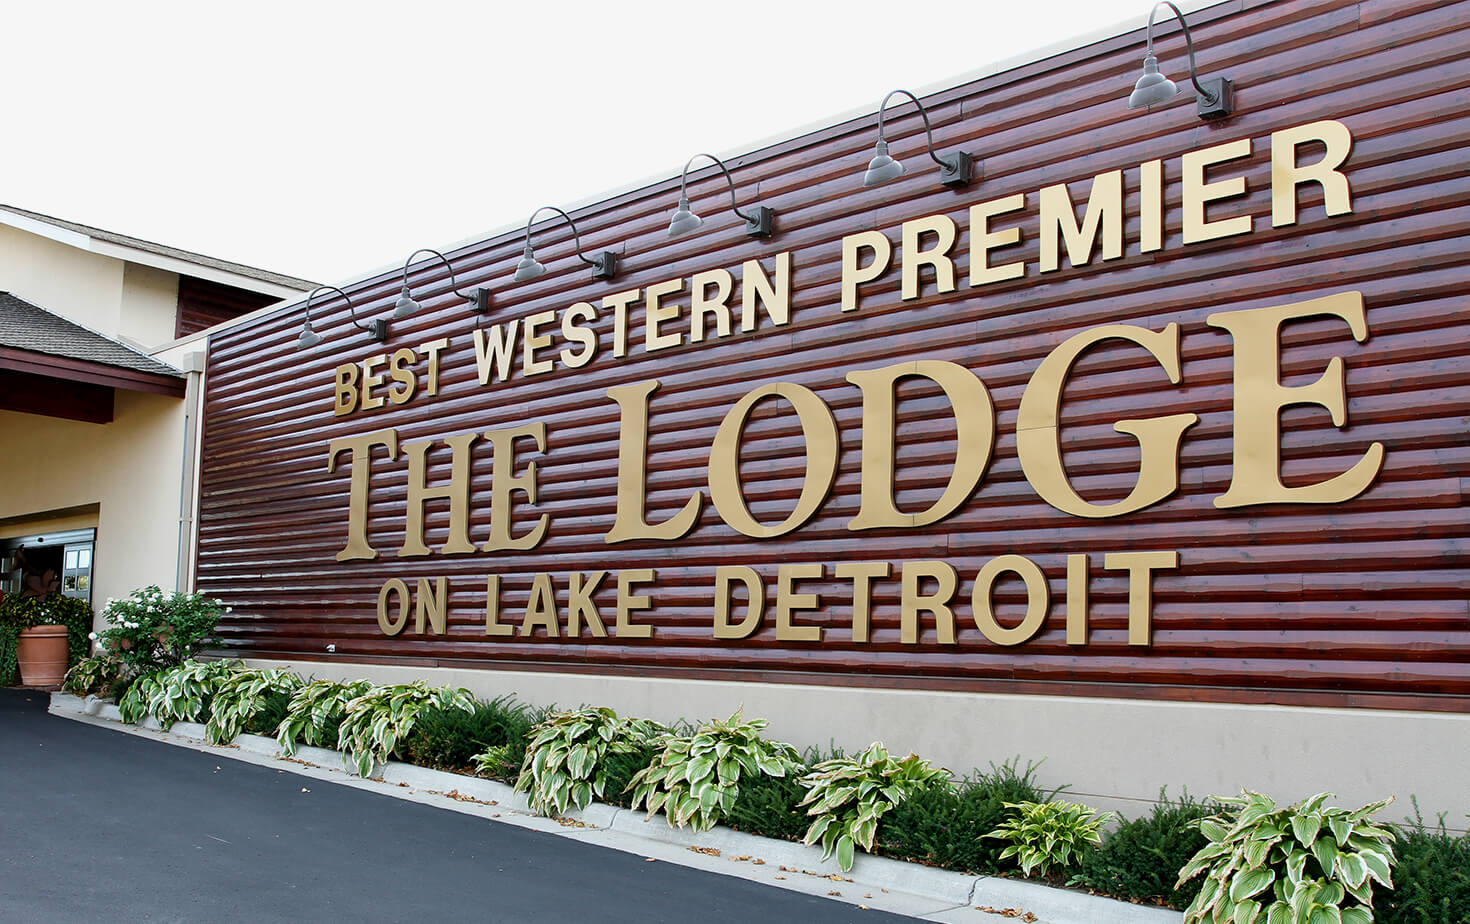 Best Western Premier The Lodge on Lake Detroit Large Building Letters on Side of Entrance